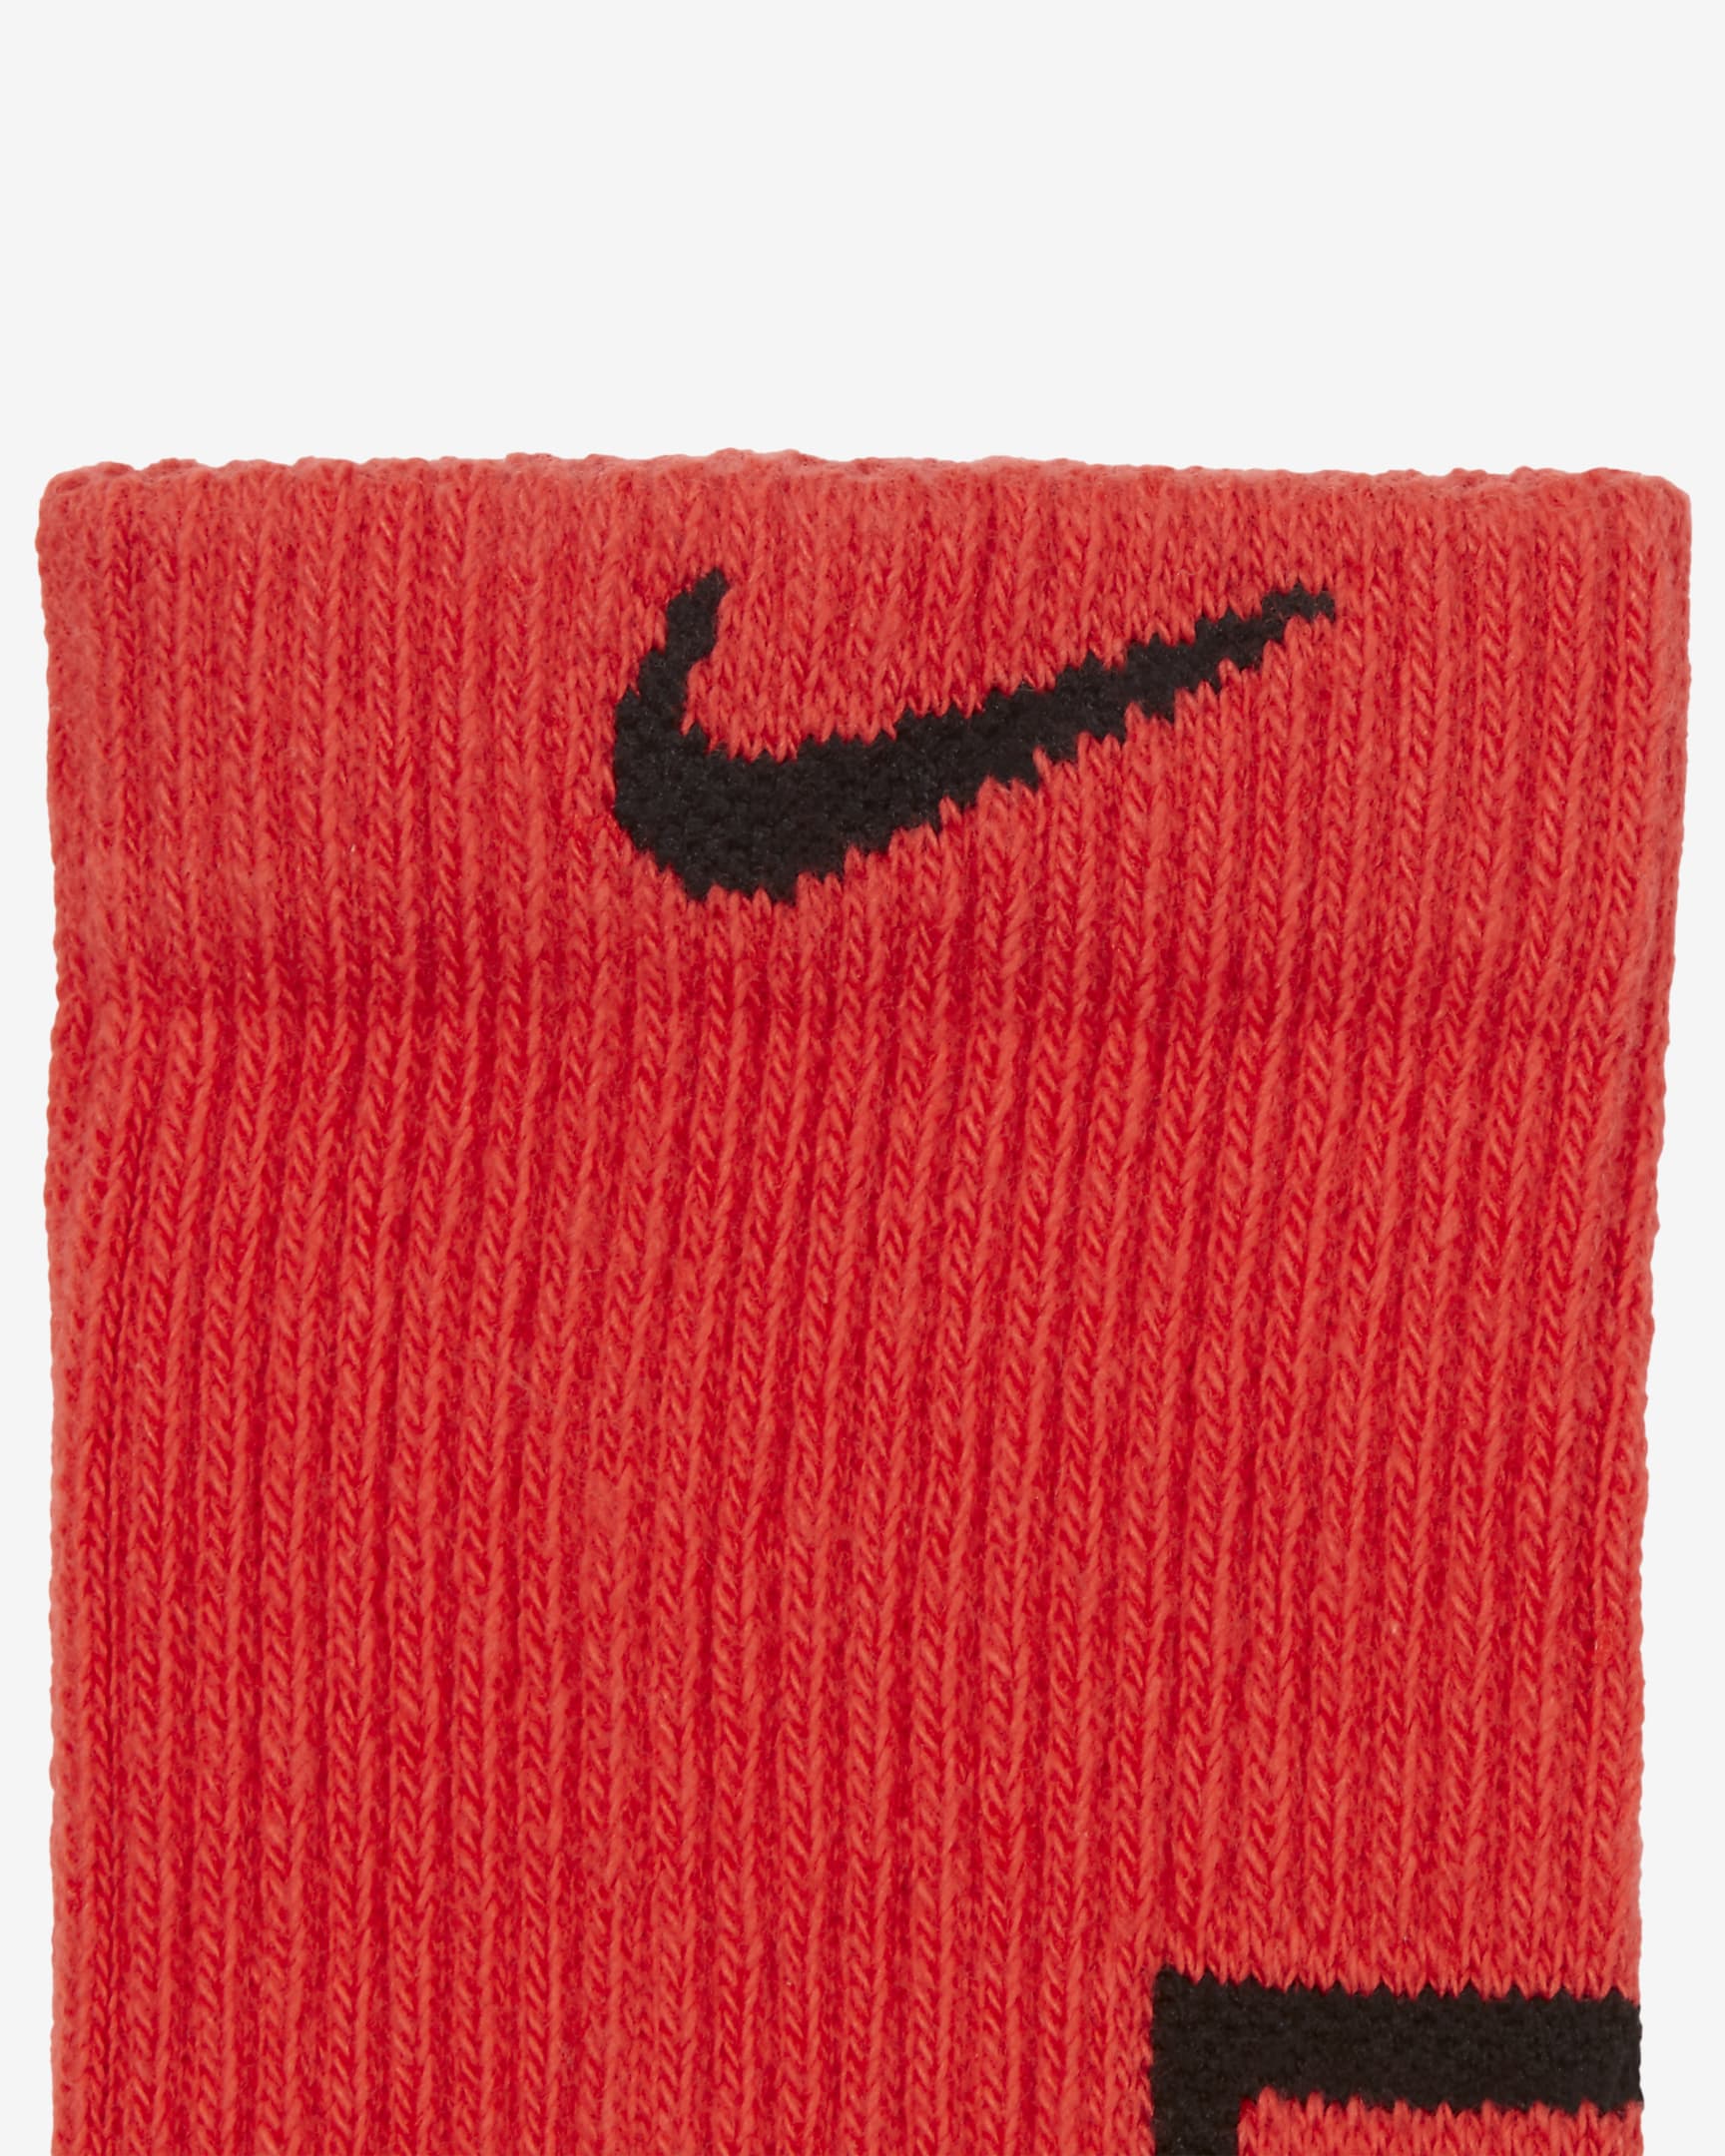 Nike Everyday Plus Cushioned Training Crew Socks (3 Pairs). Nike.com